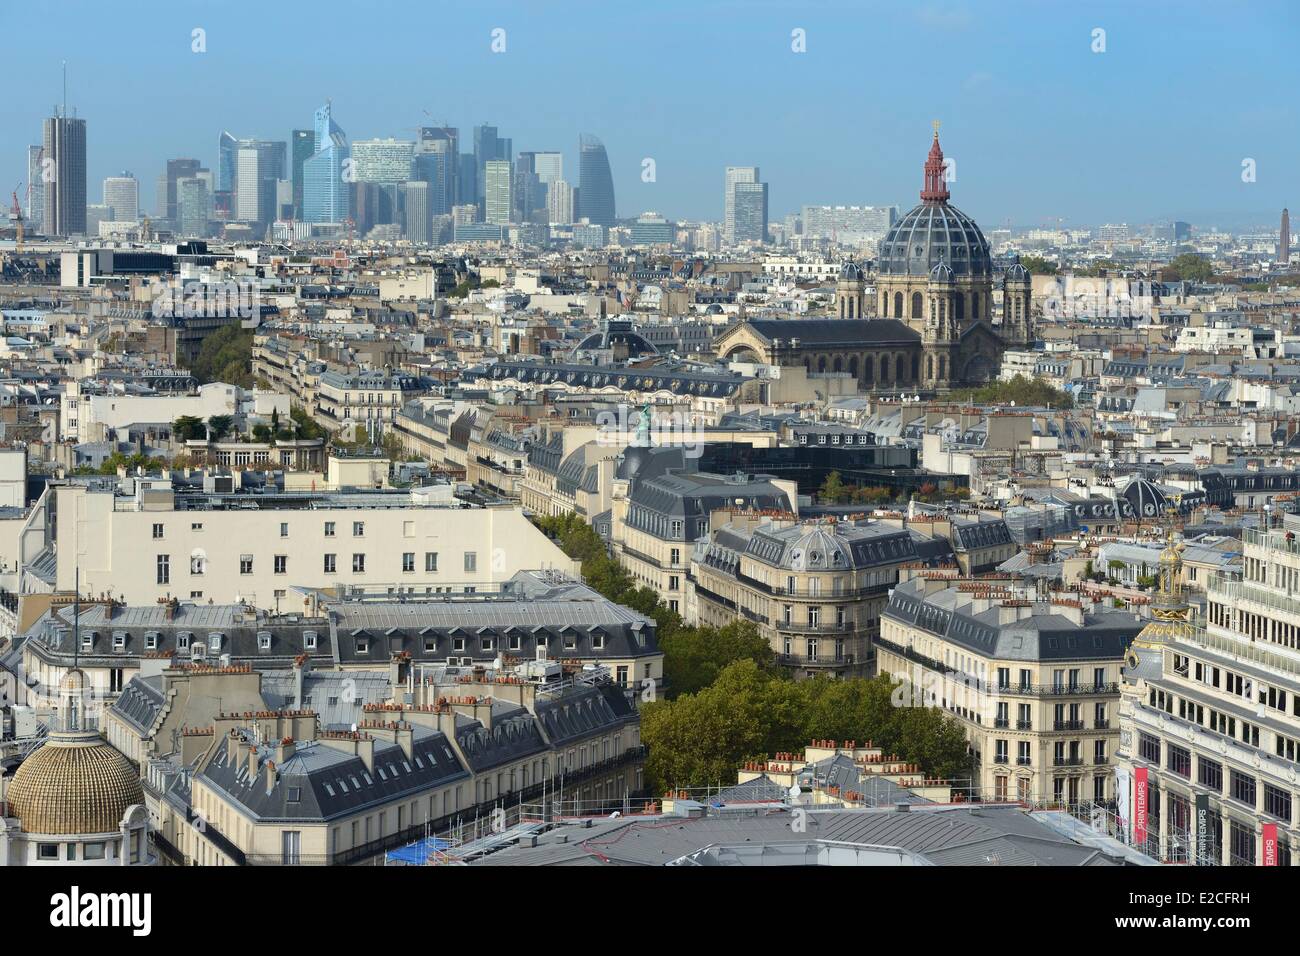 France, Paris, the department store Le Printemps on the boulevard Haussmann, the dome of Saint Augustin Church and the buildings of La Defense District Stock Photo